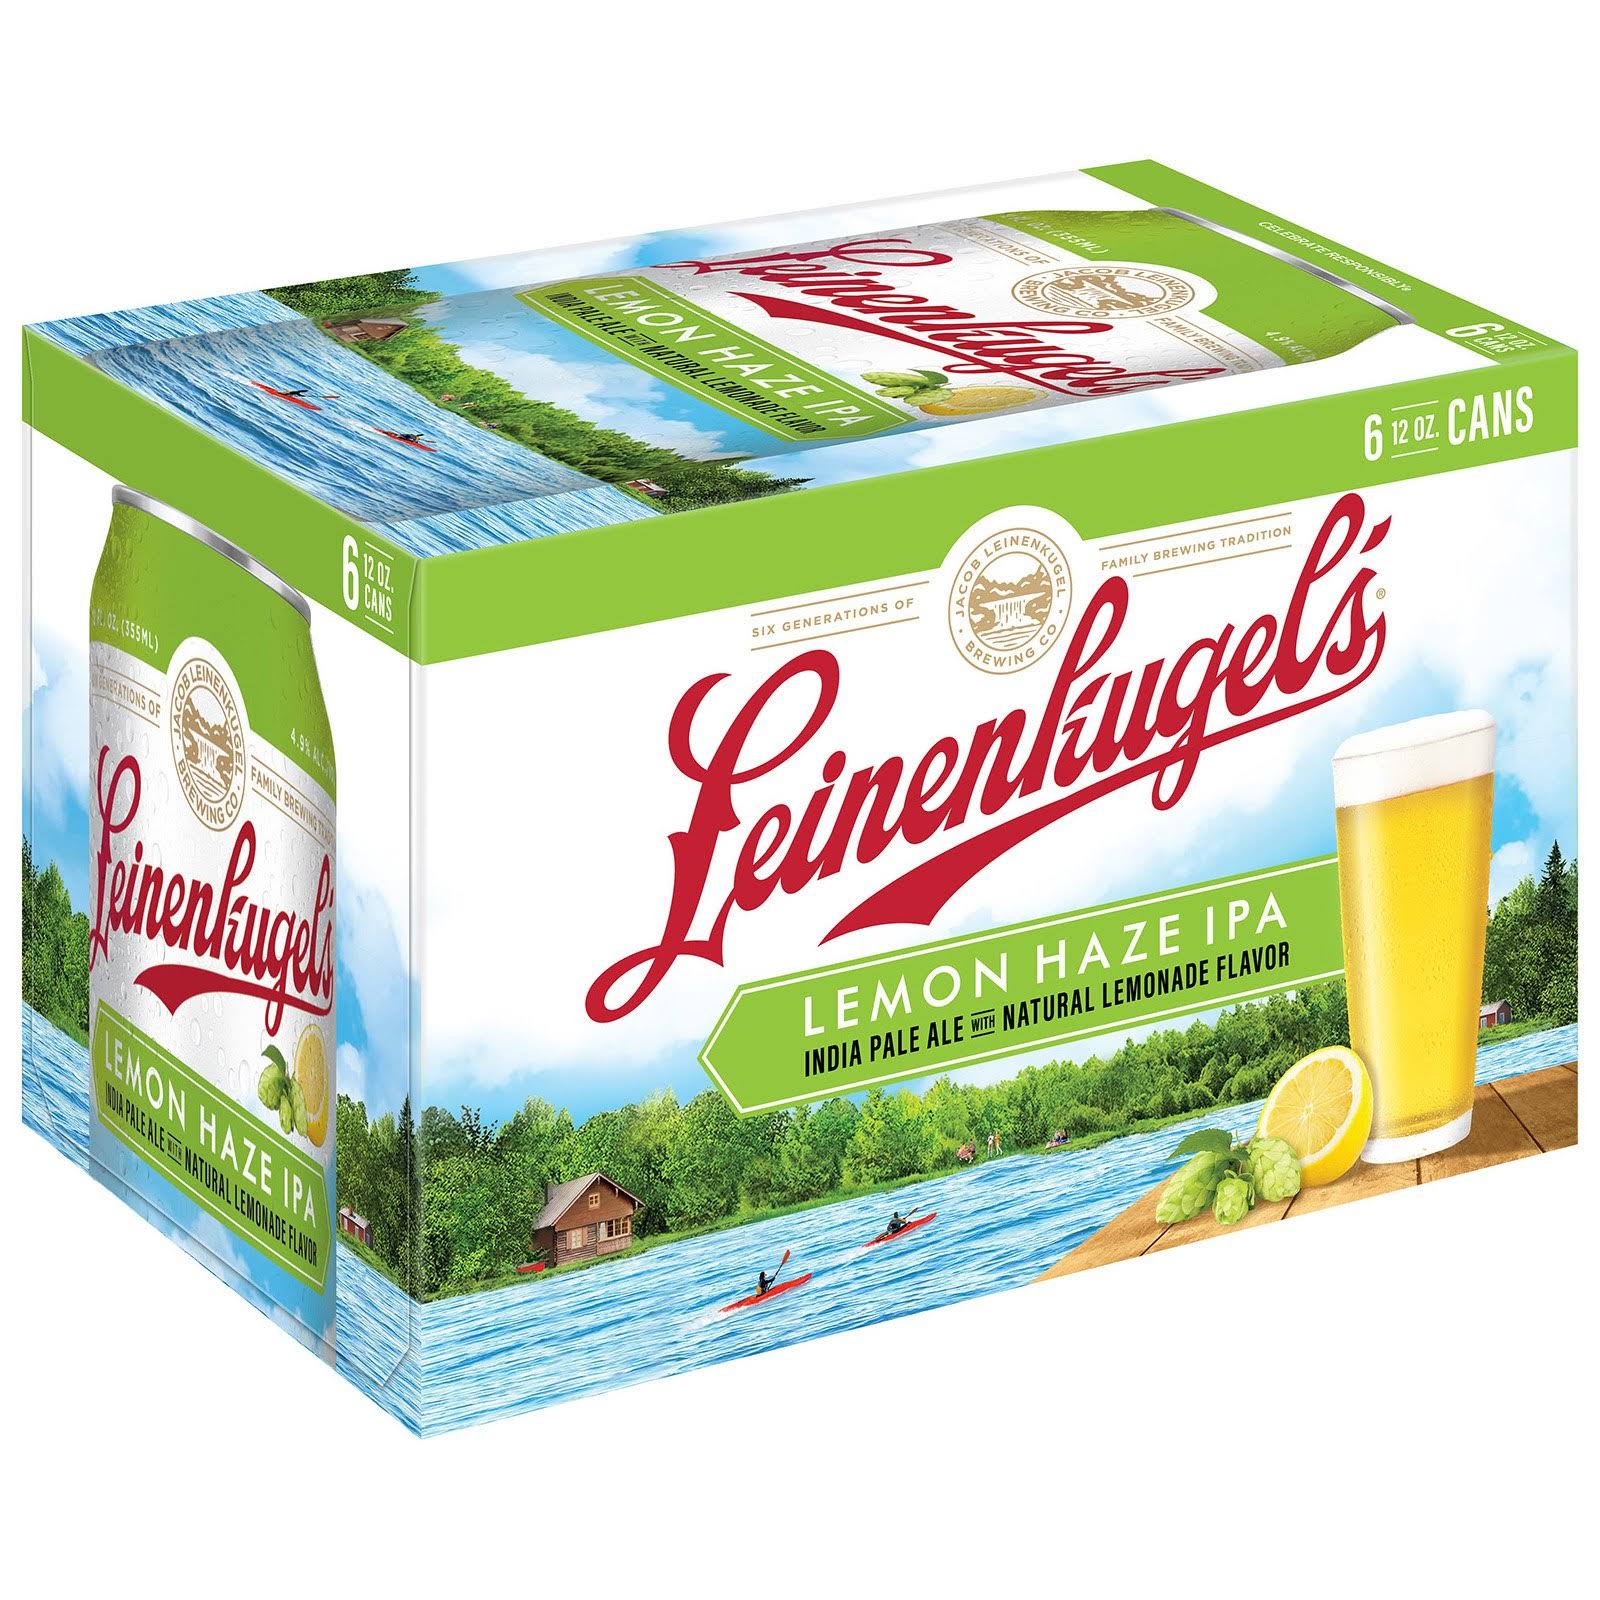 Leinenkugel's Beer, India Pale, Ale, Lemon Haze IPA - 6 pack, 12 oz cans